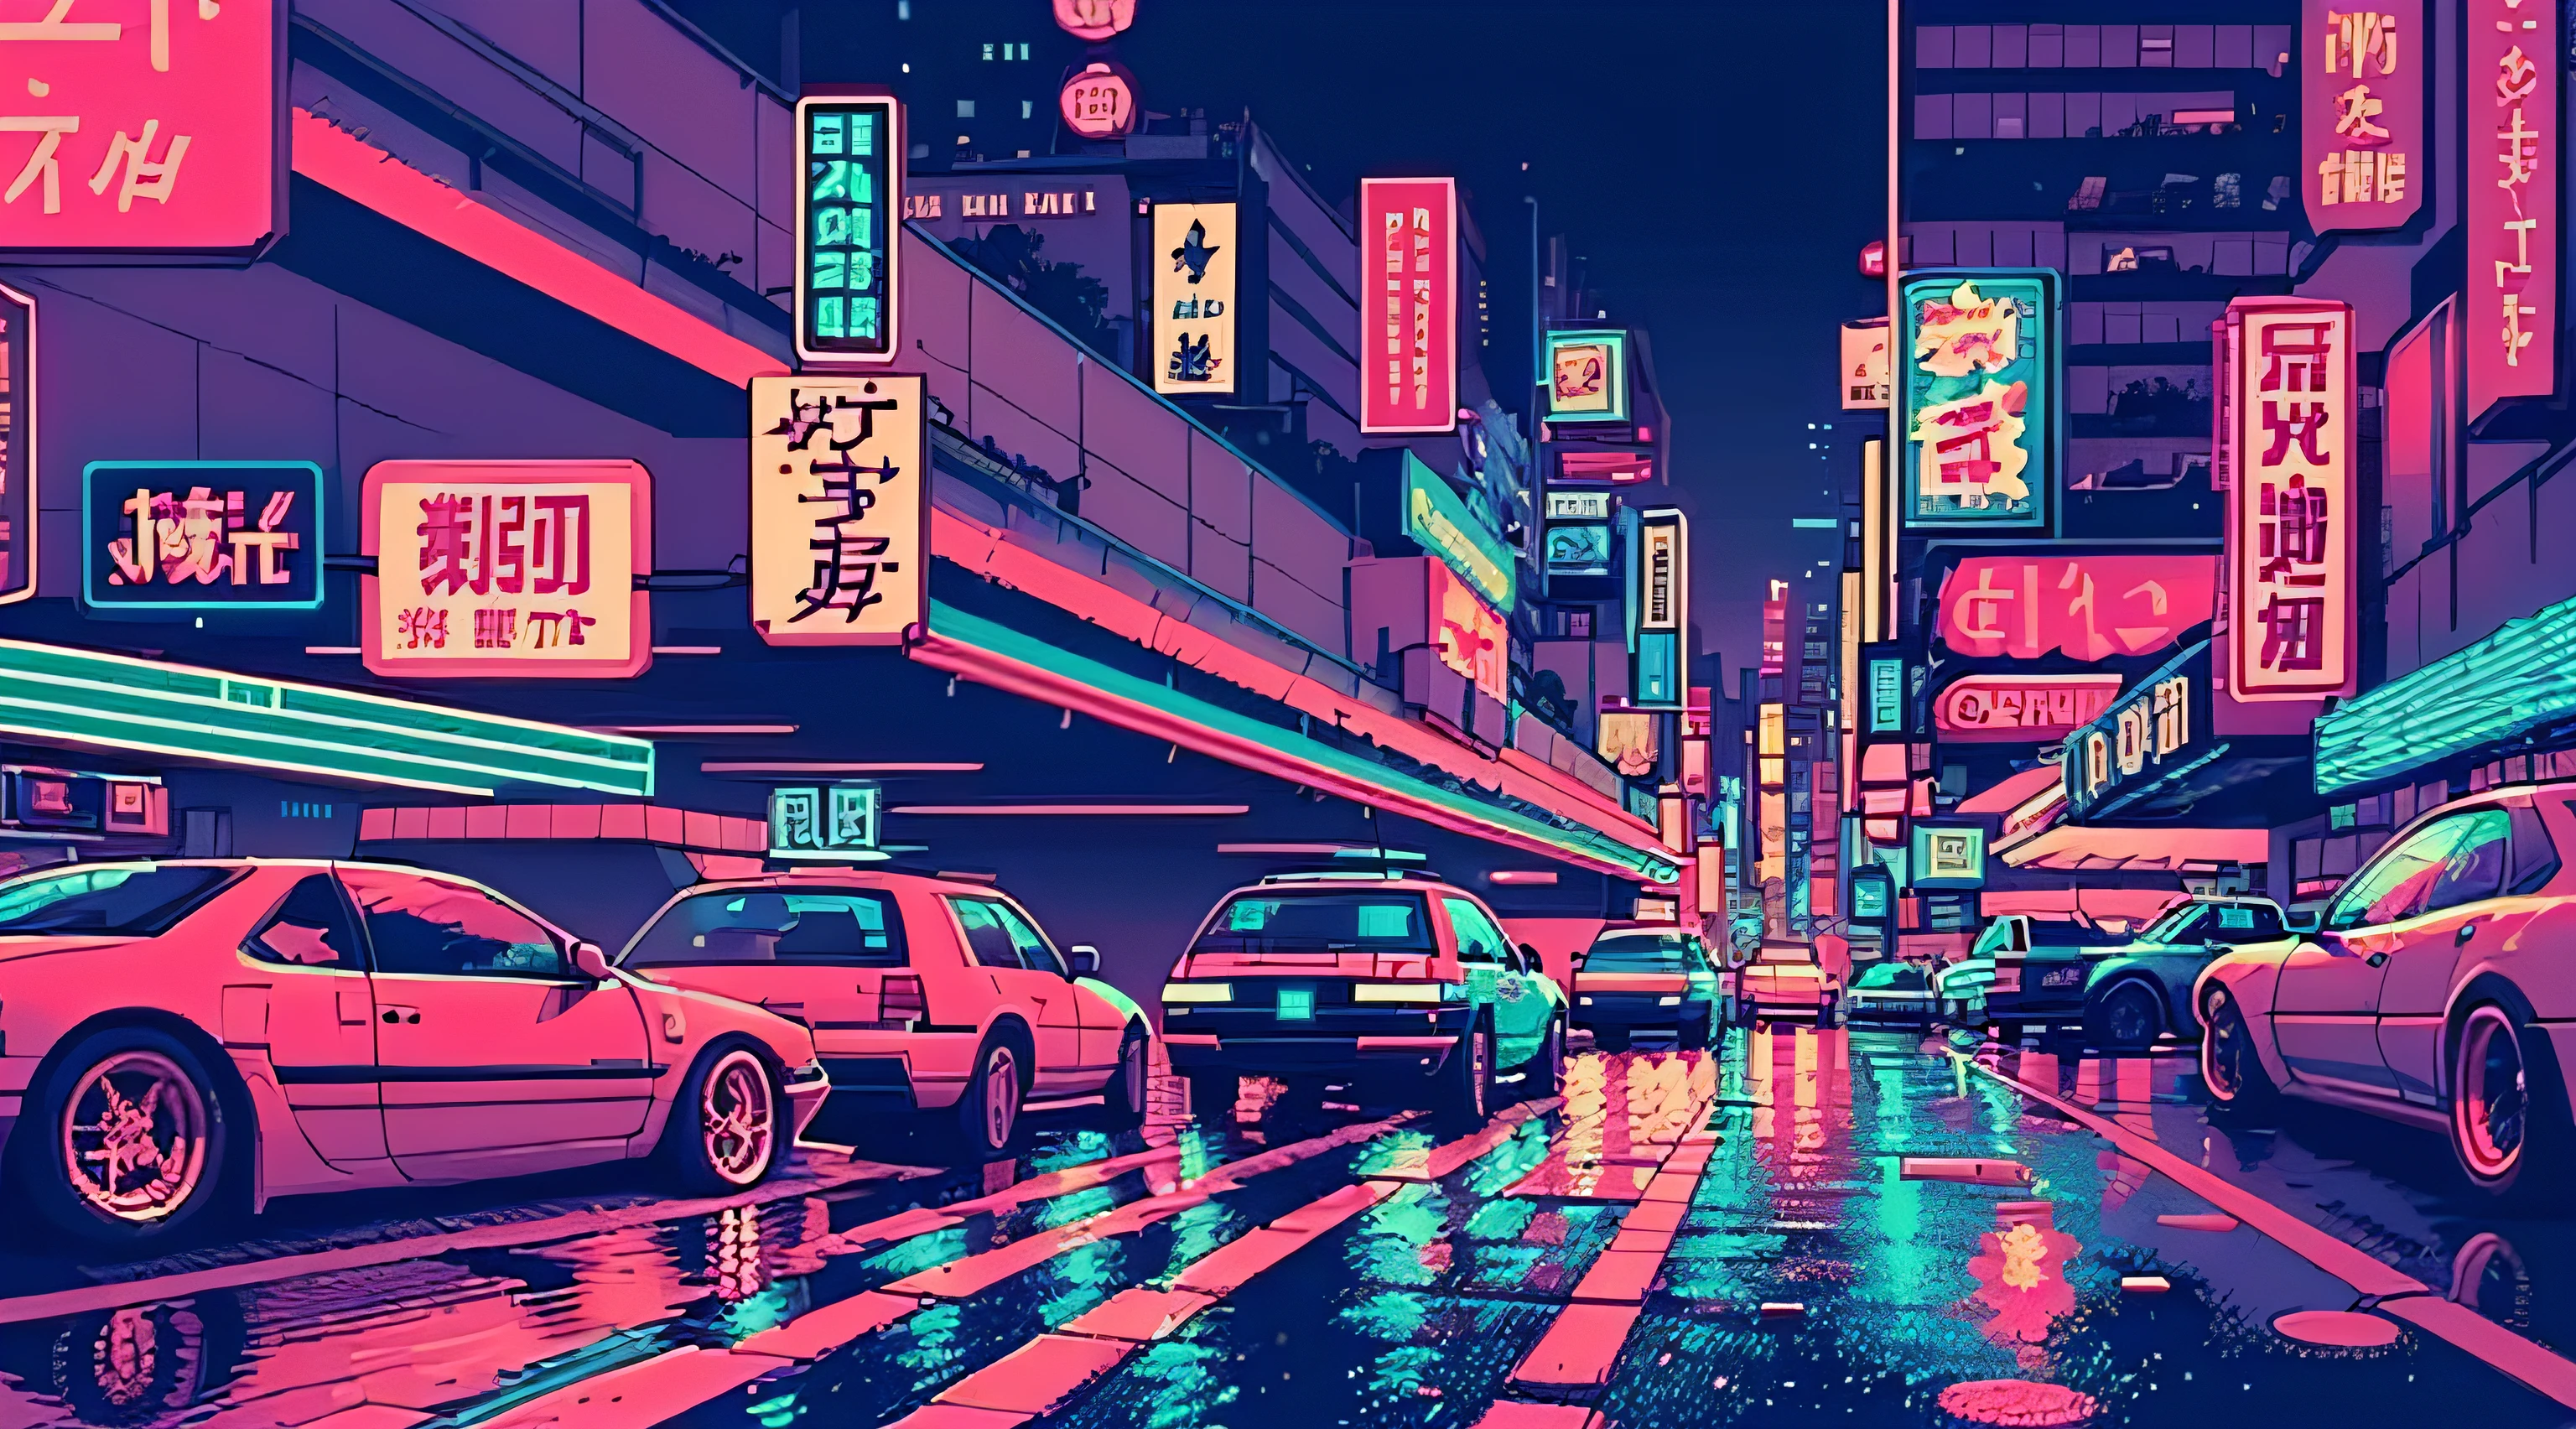 (bokeh effect), (dinamic angle), ((Masterpiece artwork)), (streets of tokyo), (zebracross), (Raby), (natta), empty city, tenebrosa, (neon), pixelart, ((pixelated)), cyberpunk, (retro)